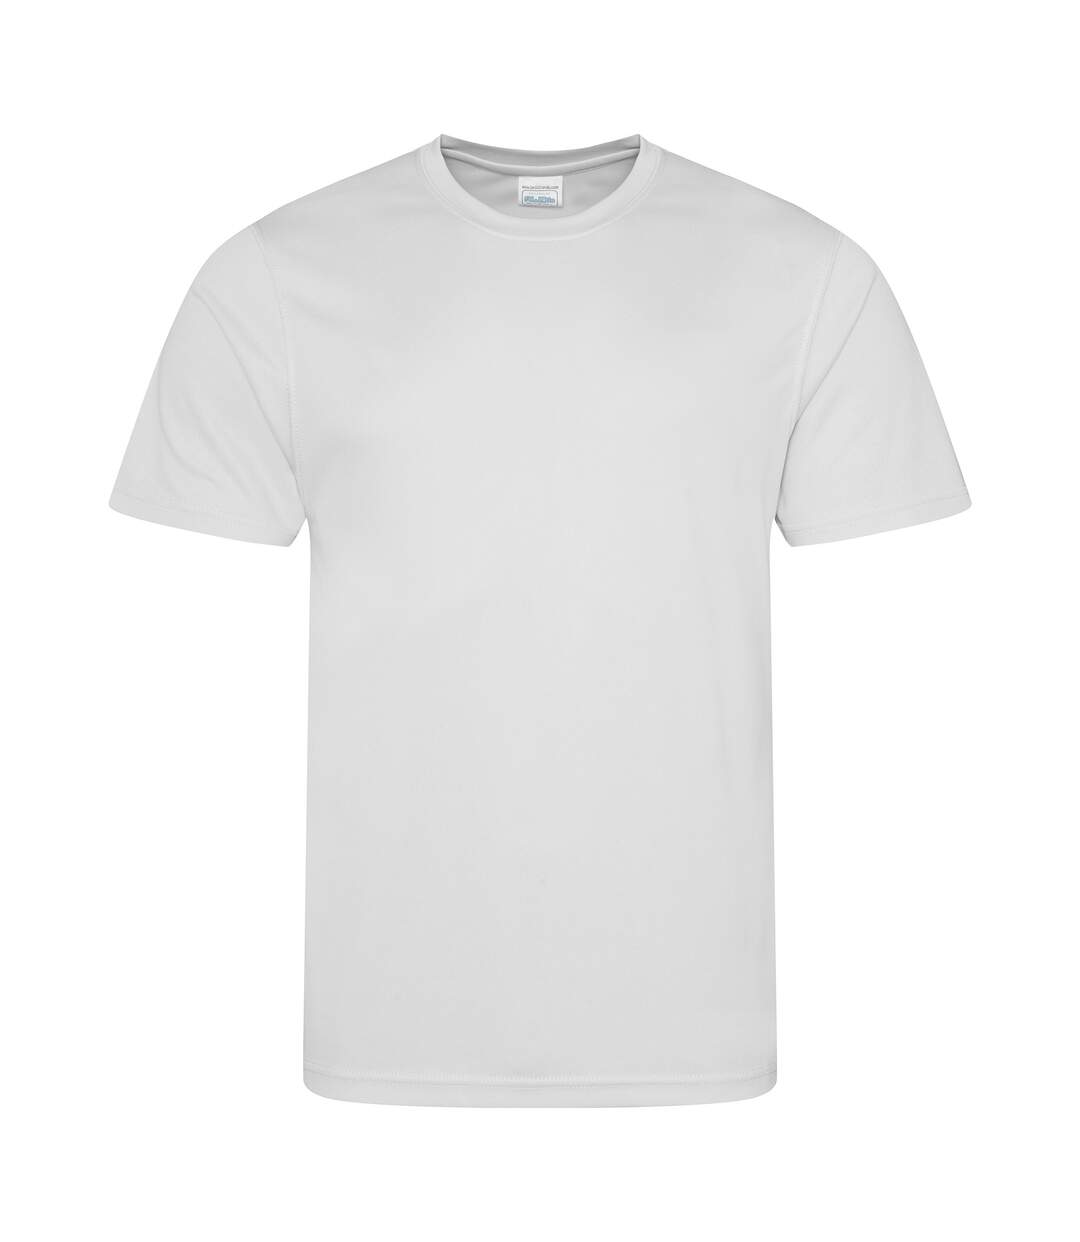 Just Cool Mens Performance Plain T-Shirt (Ash)